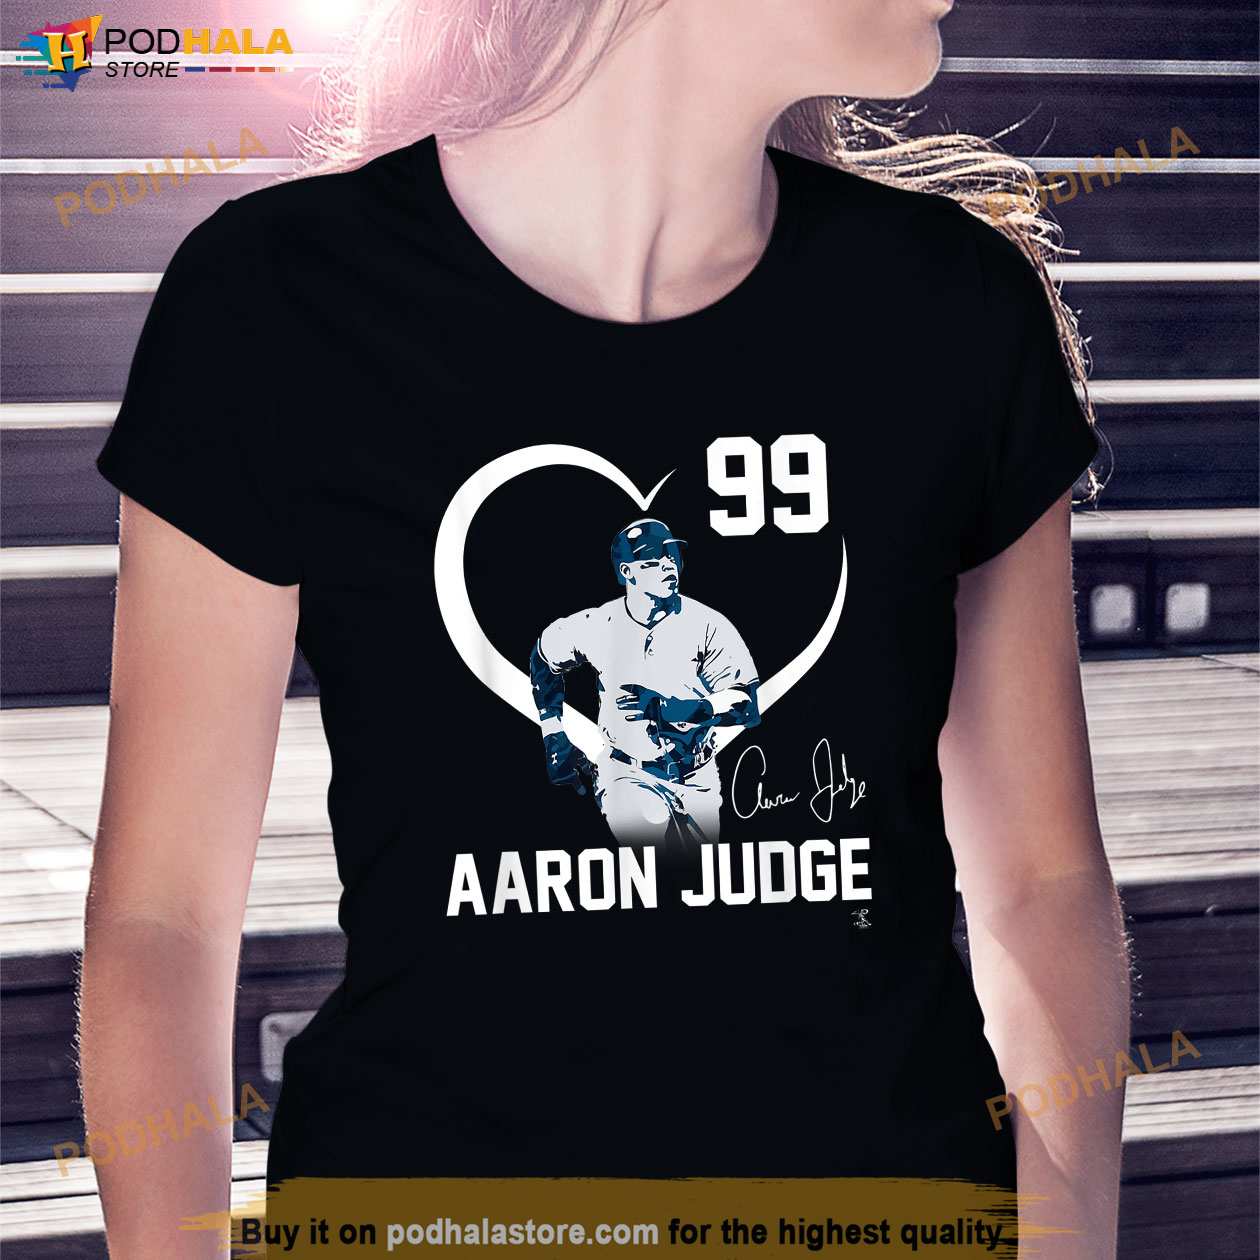 aaron judge player t shirt